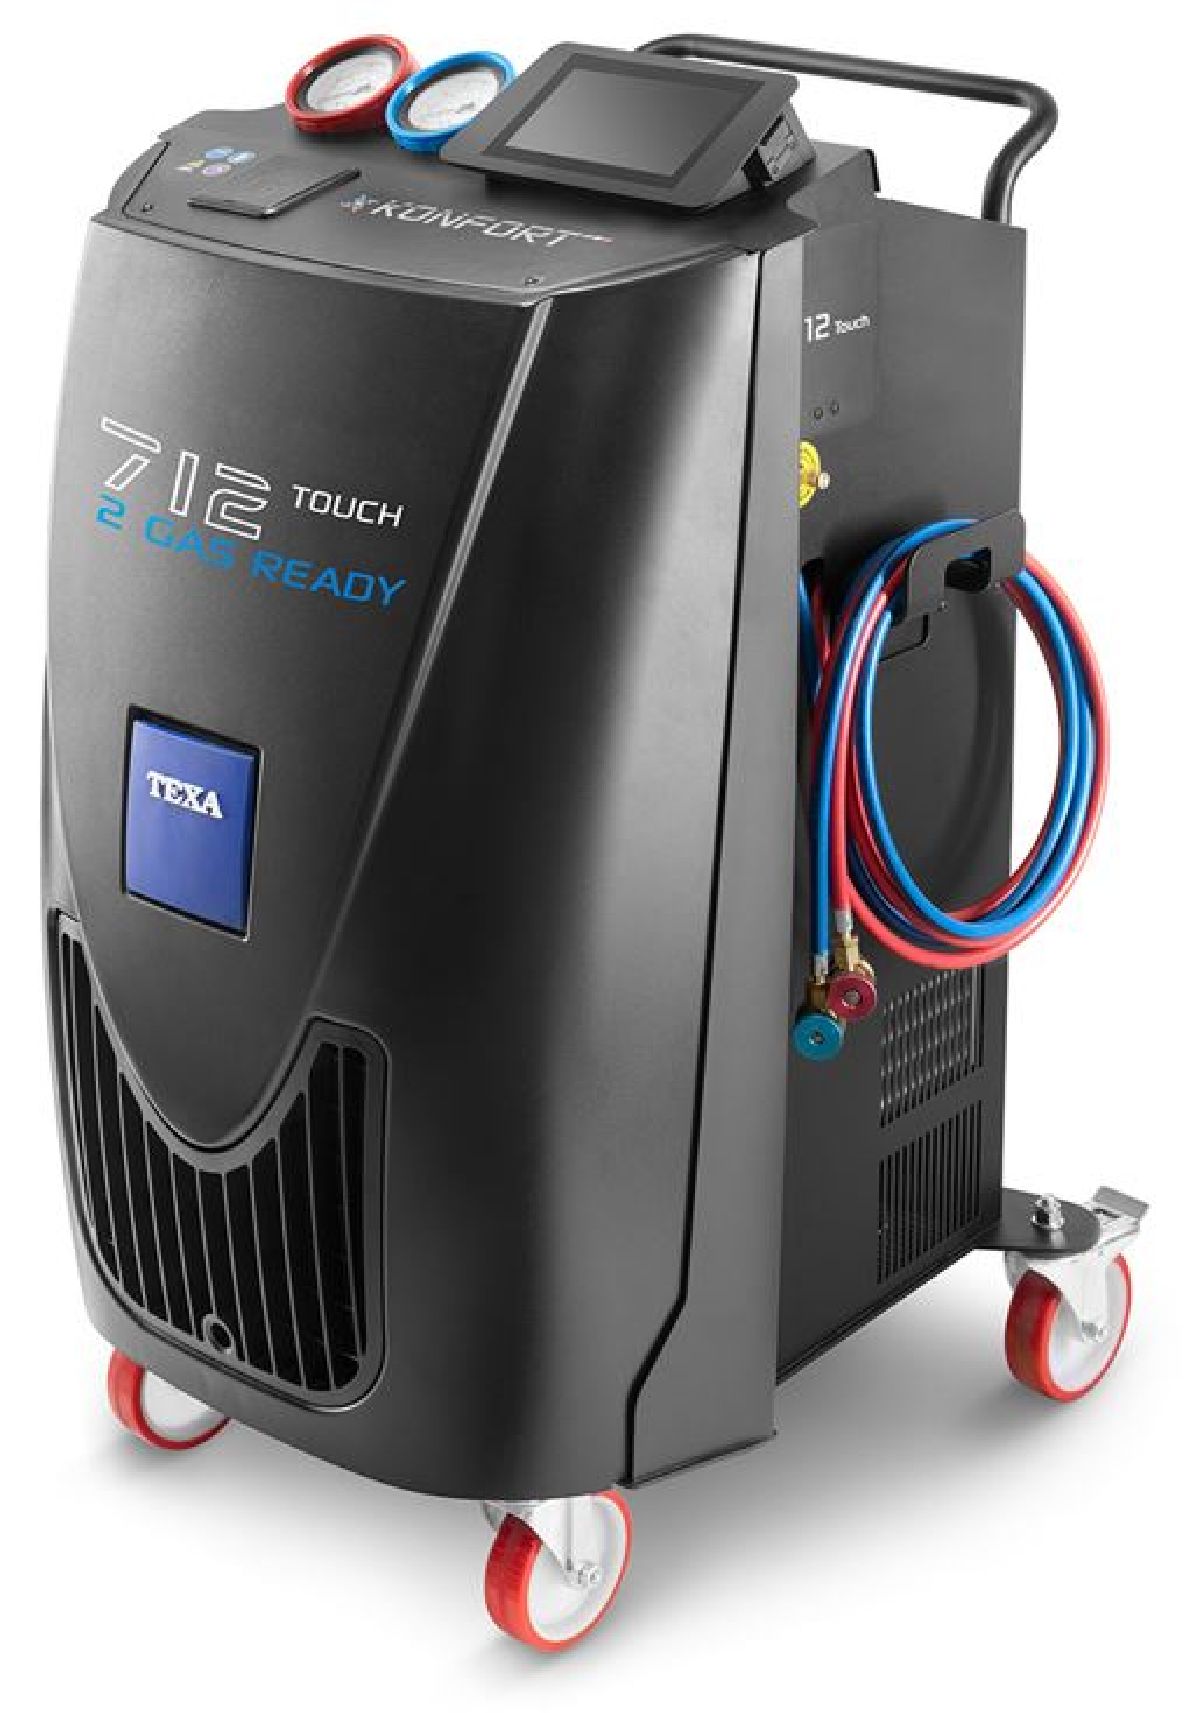 TEXA Klimagerät Konfort 712R TOUCH